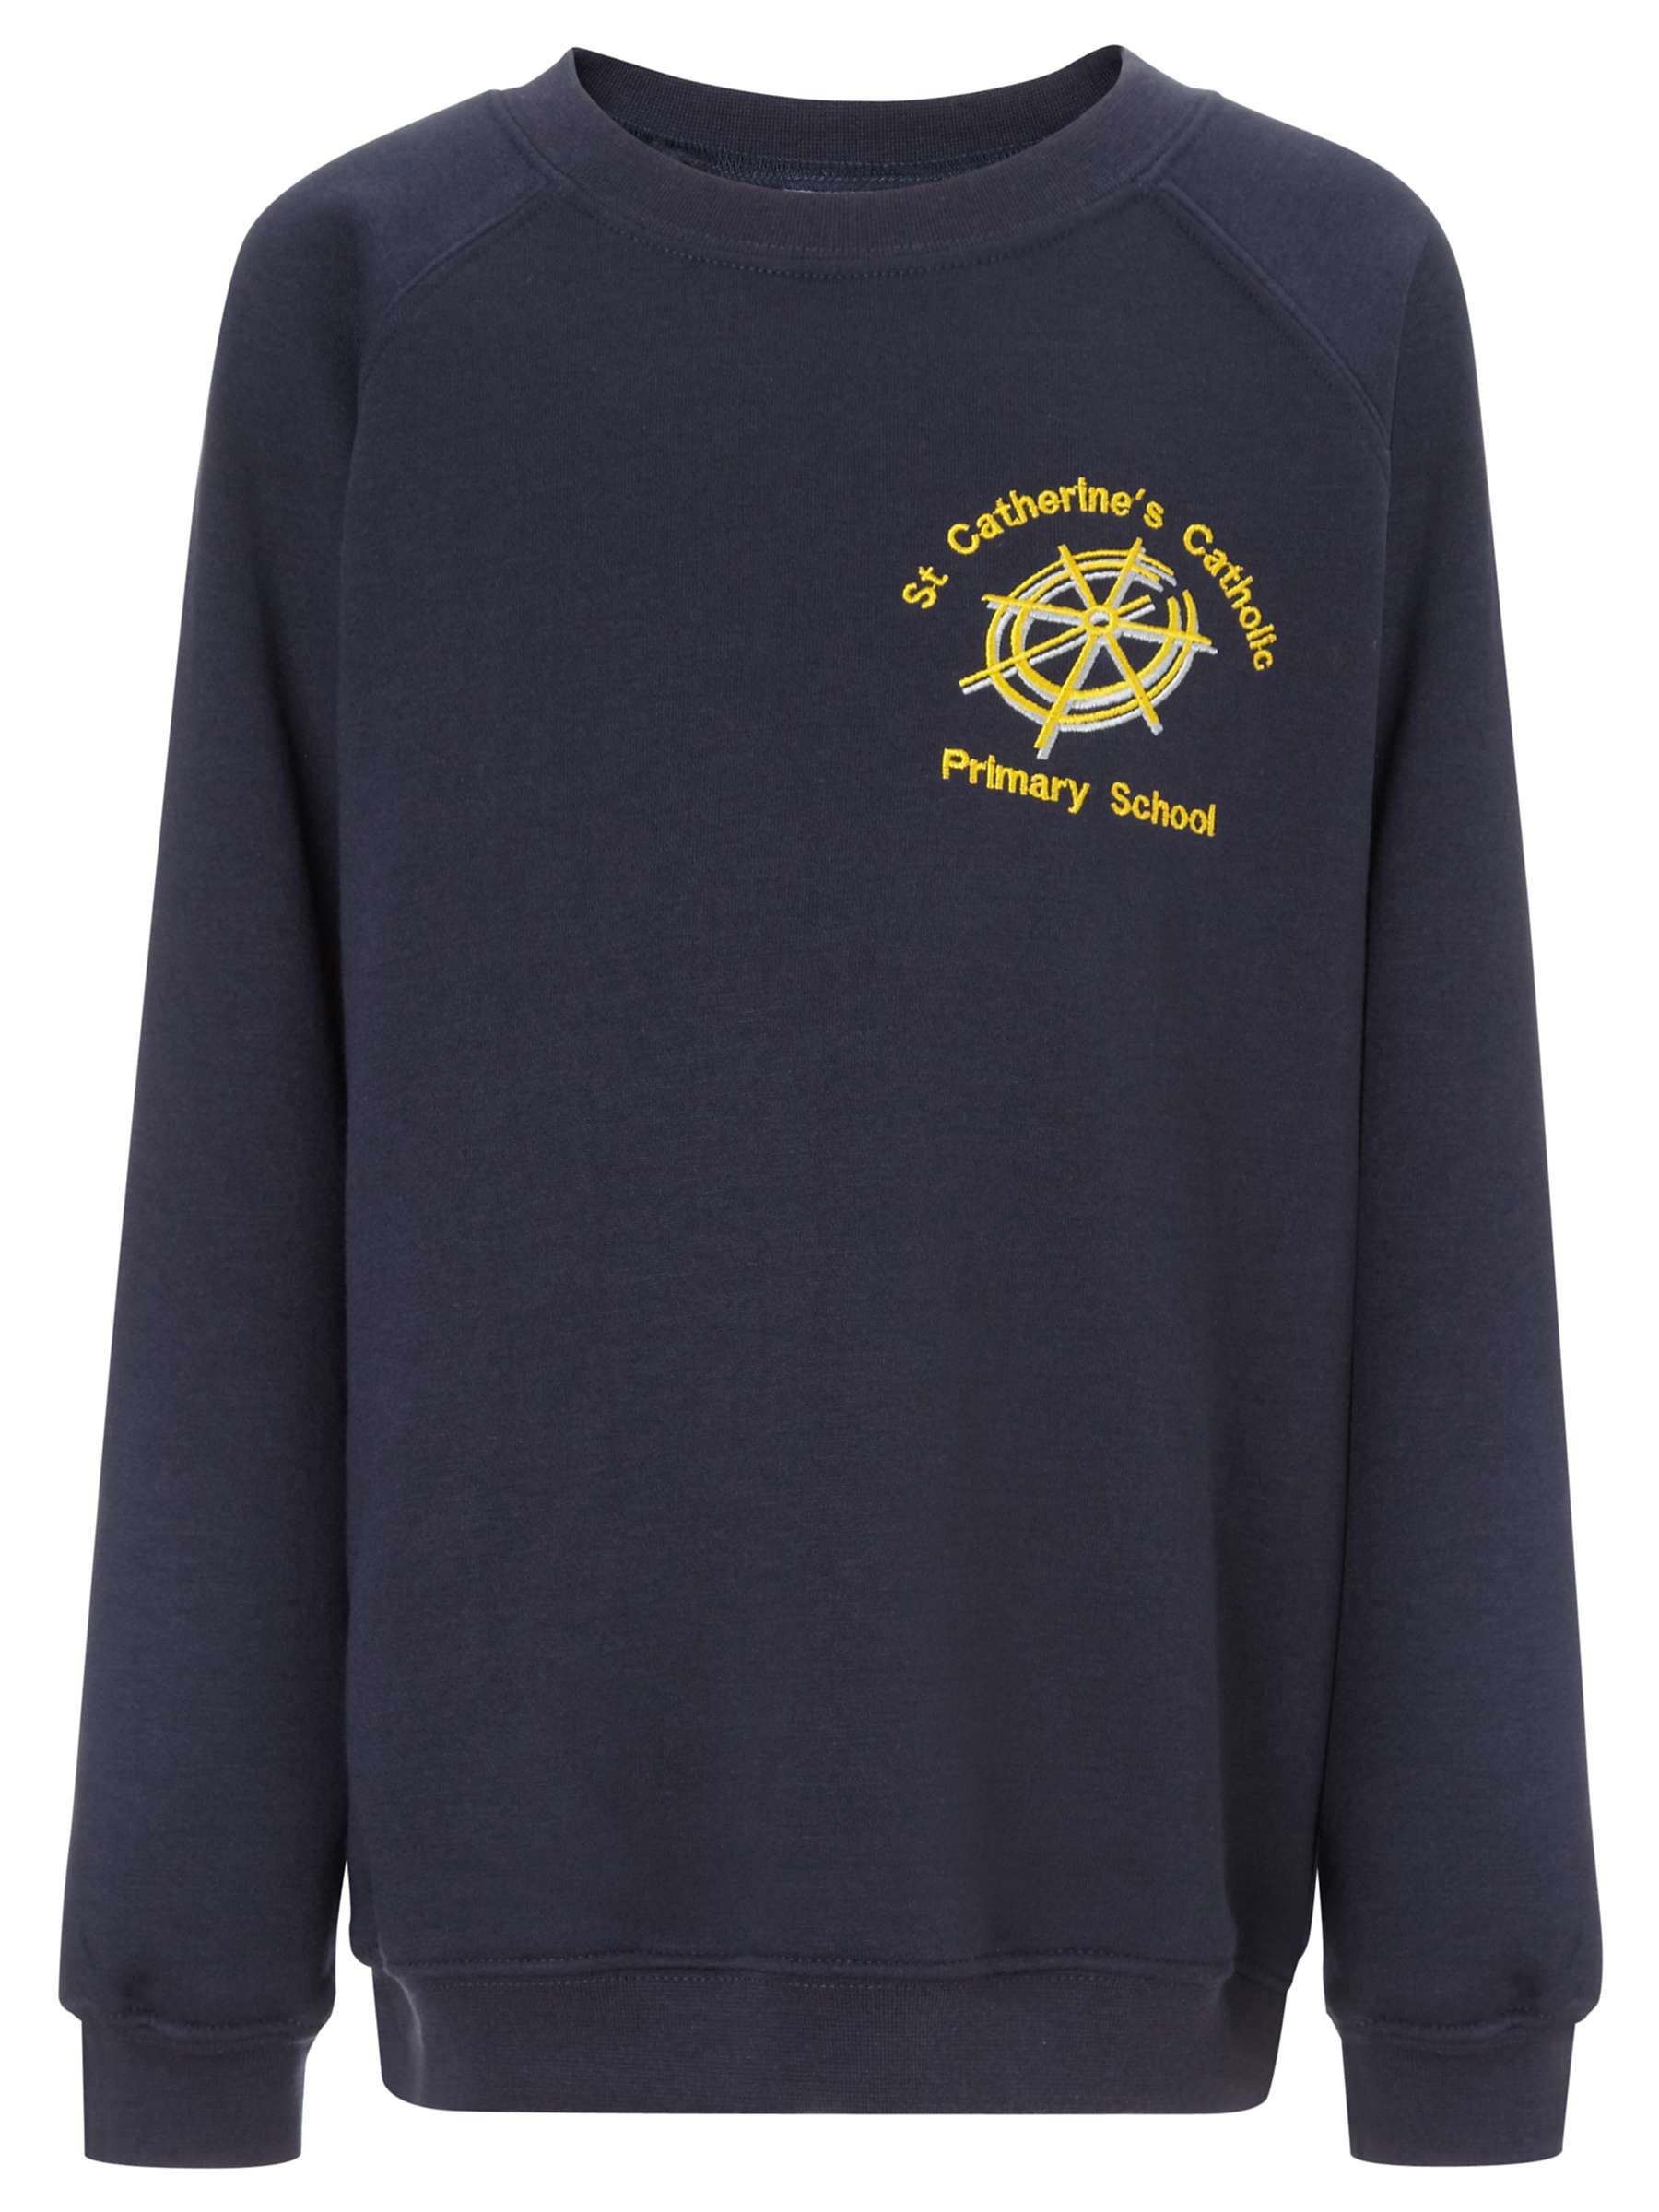 Buy St Catherine's Catholic Primary School Sweatshirt, Navy Online at johnlewis.com